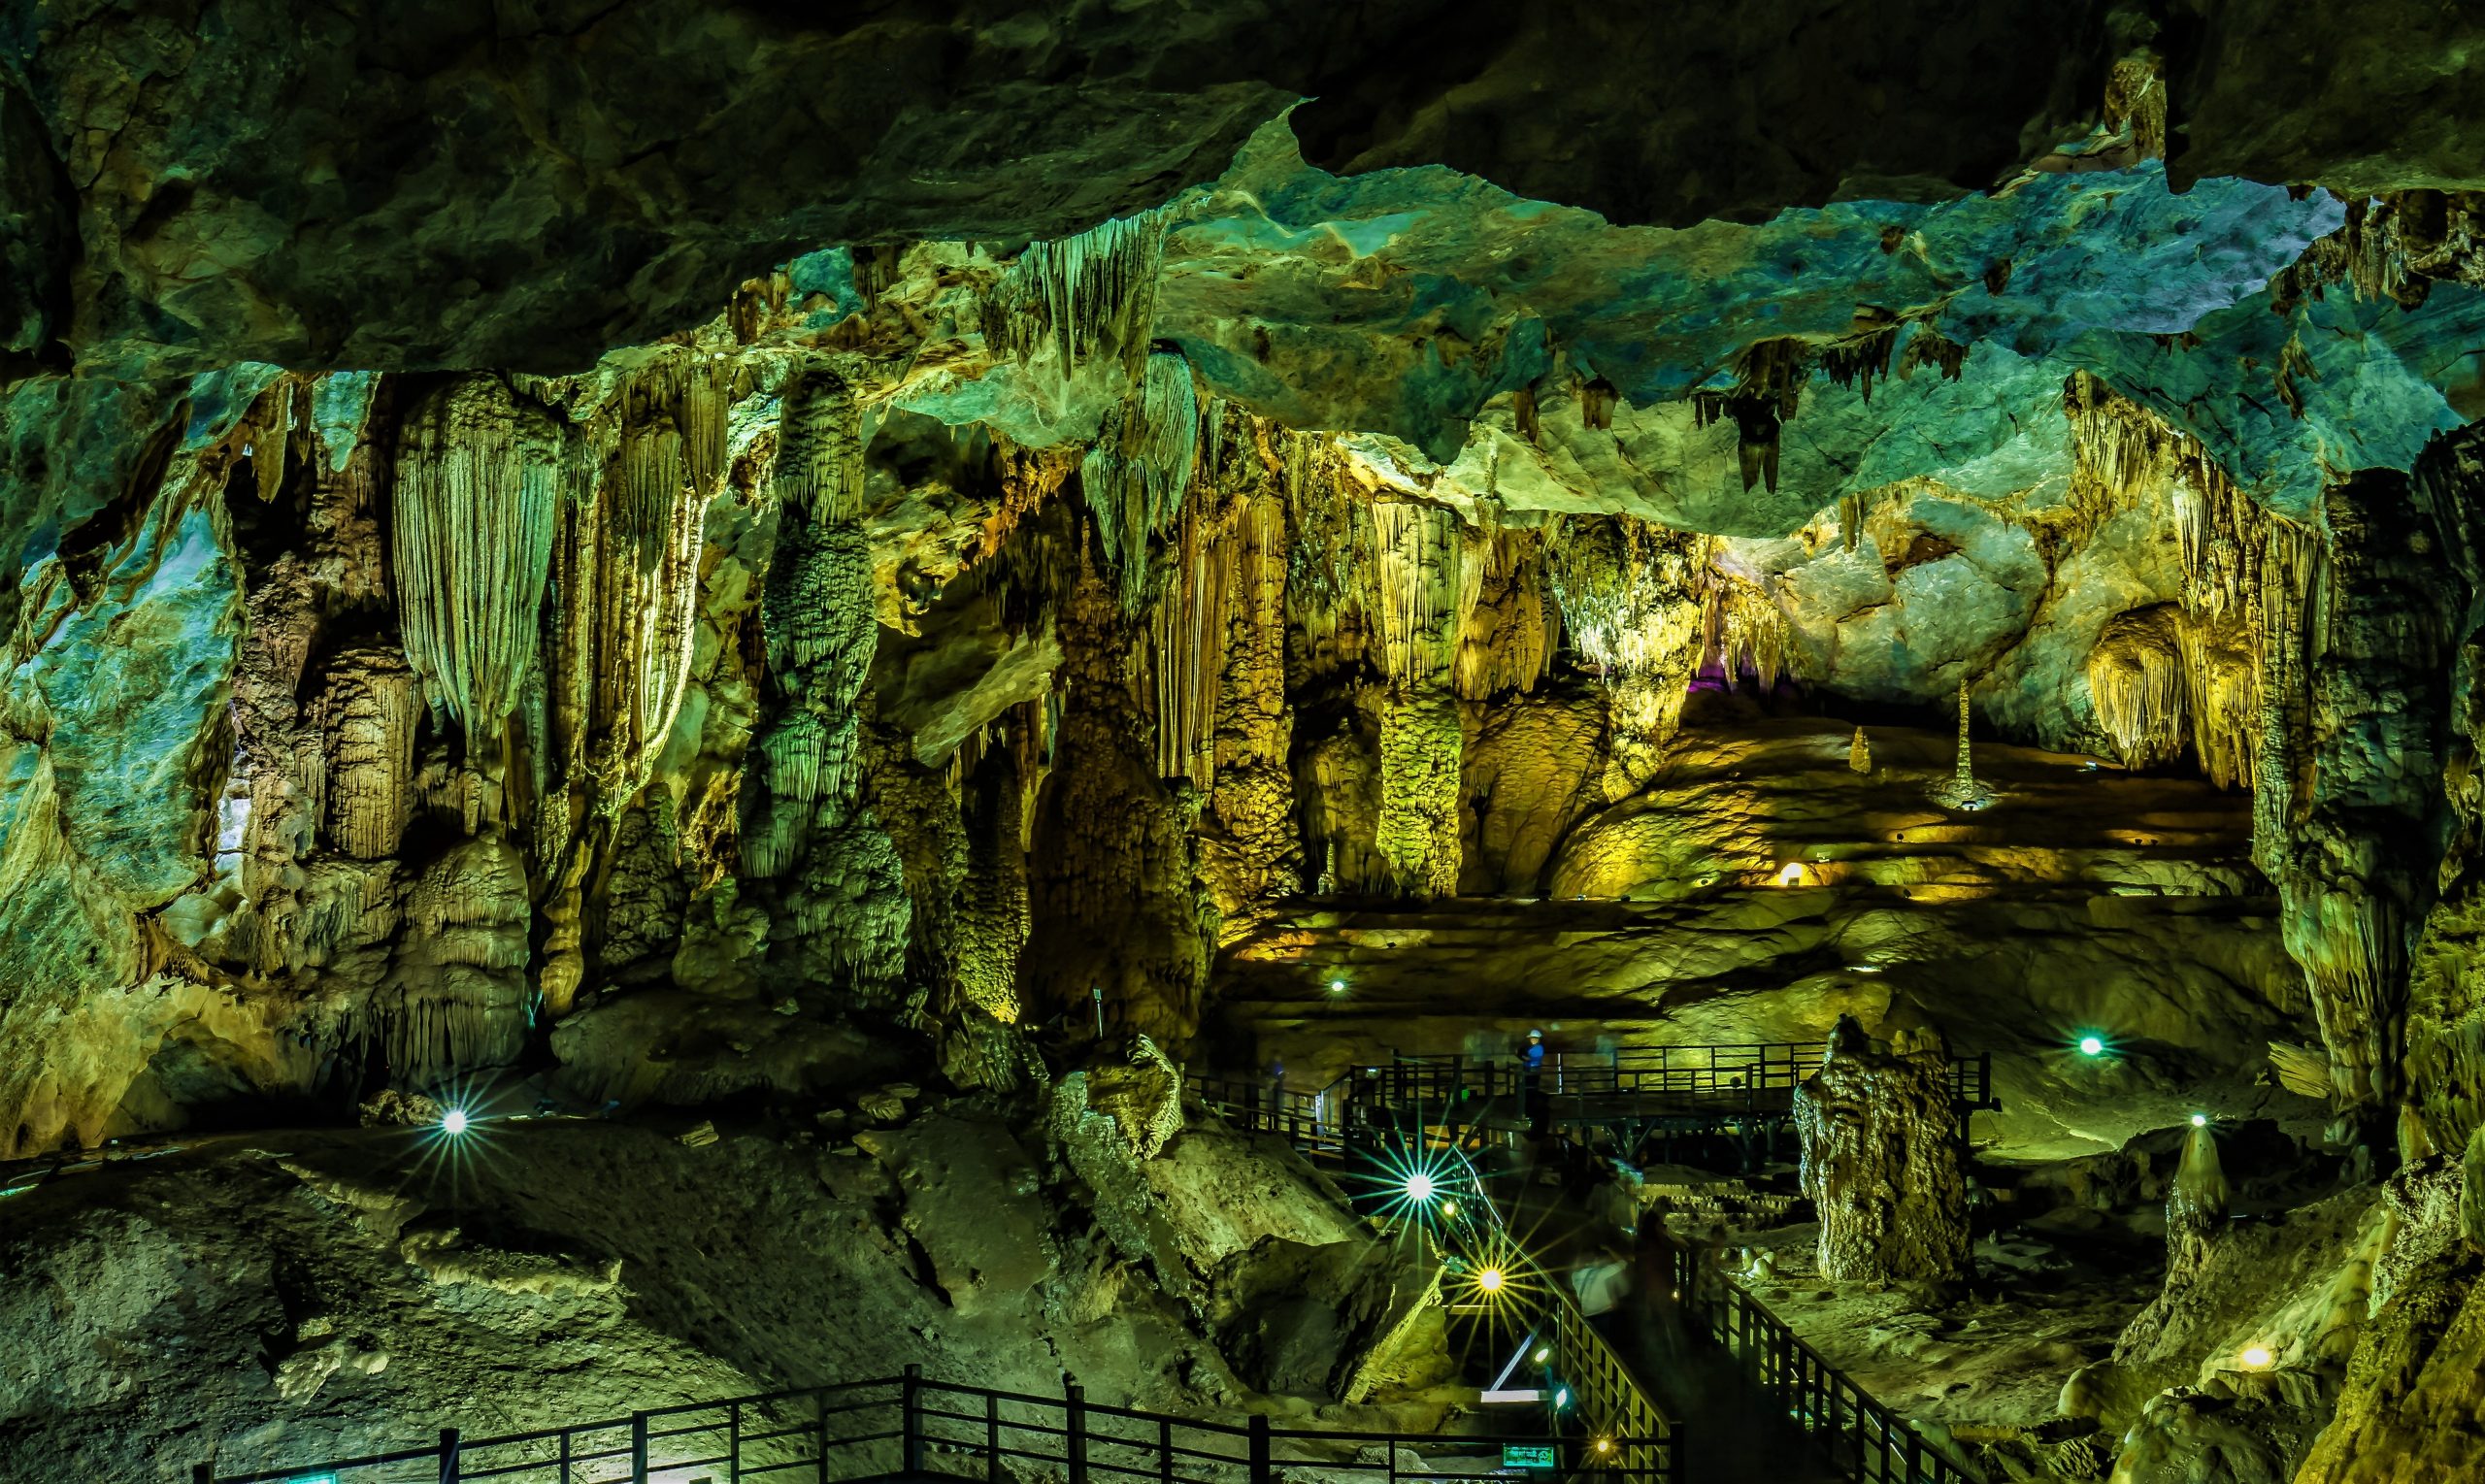 10 Best Hotels near Luray Caverns in Virginia